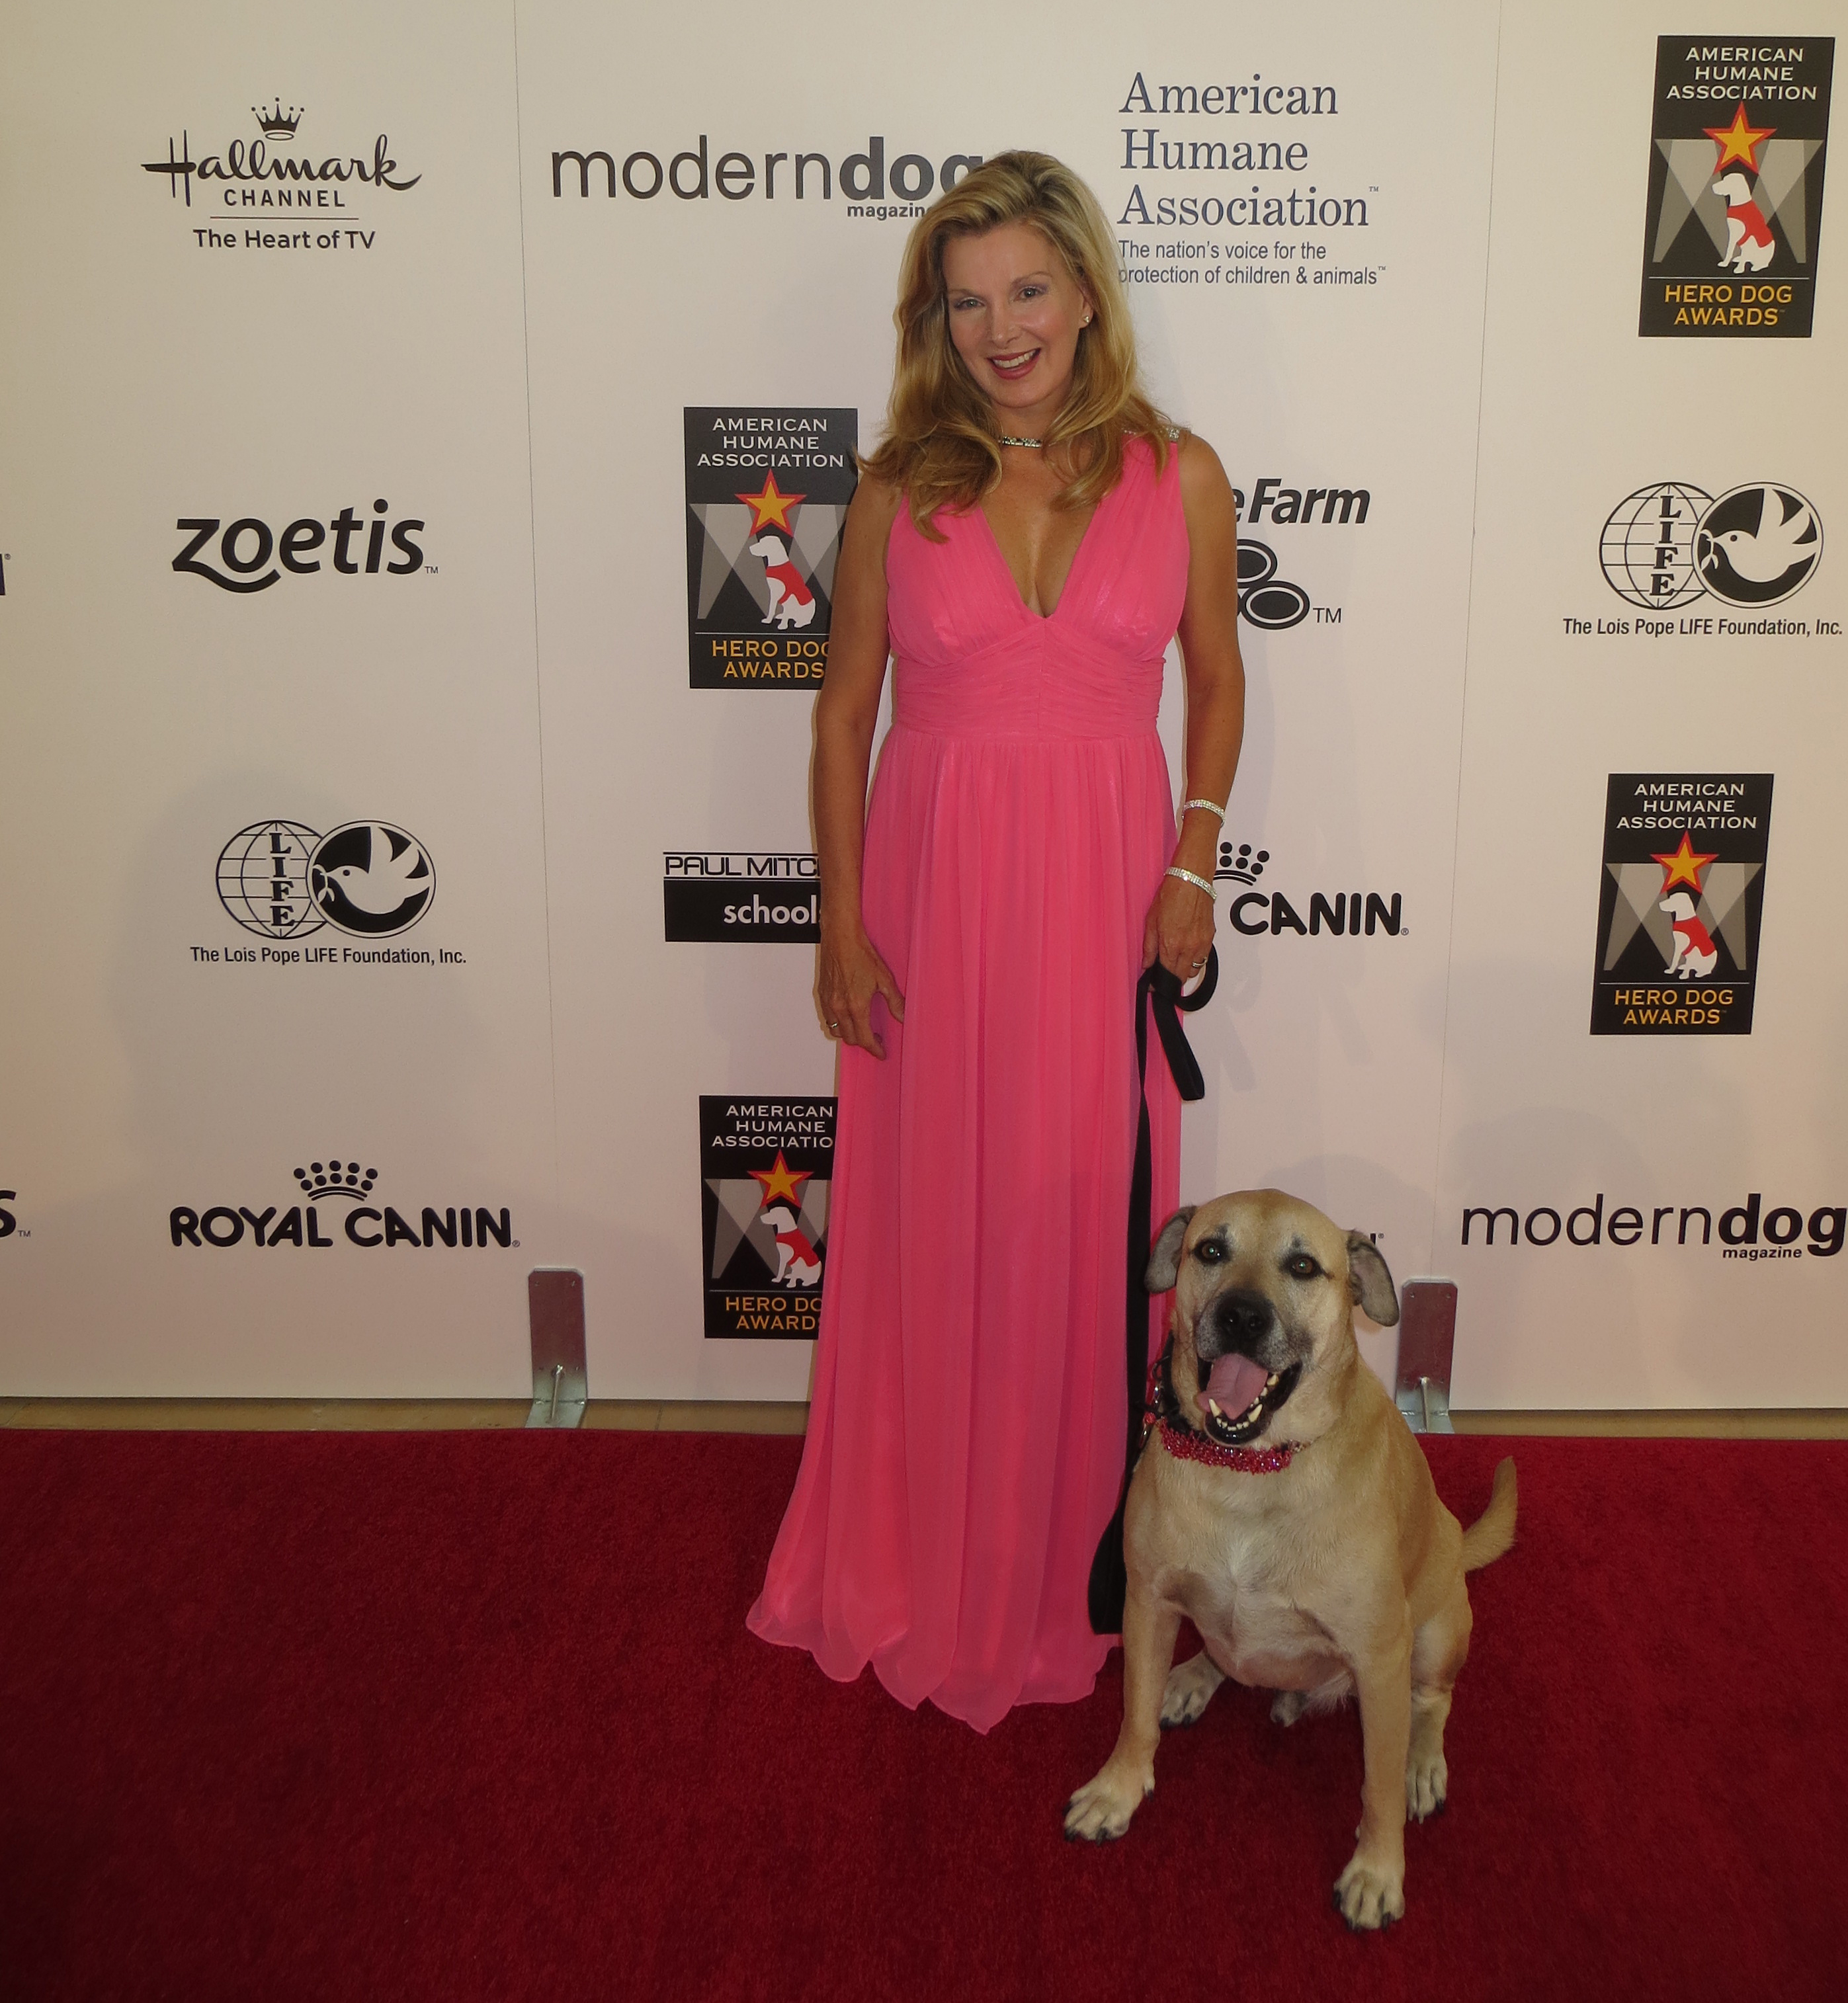 Celebrity Presenter for Hallmark Channel, American Humane Association Hero Dog Awards with Super Smiley, National Spokes-Dog for the Hero Dog Awards